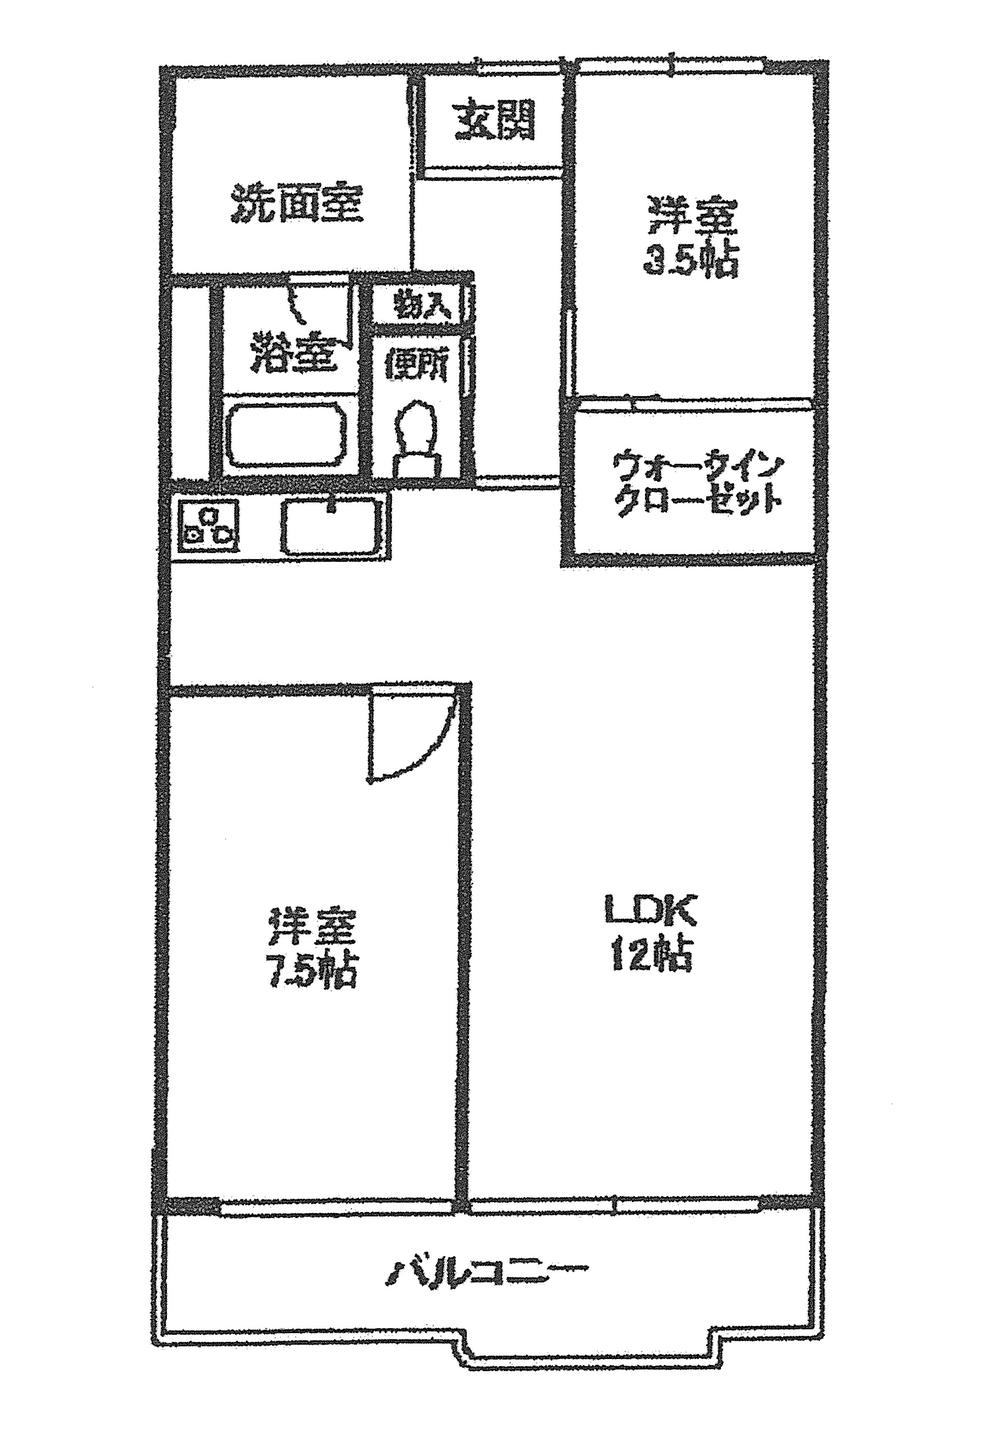 Floor plan. 2LDK, Price 7.8 million yen, Occupied area 53.76 sq m , Balcony area 7.45 sq m